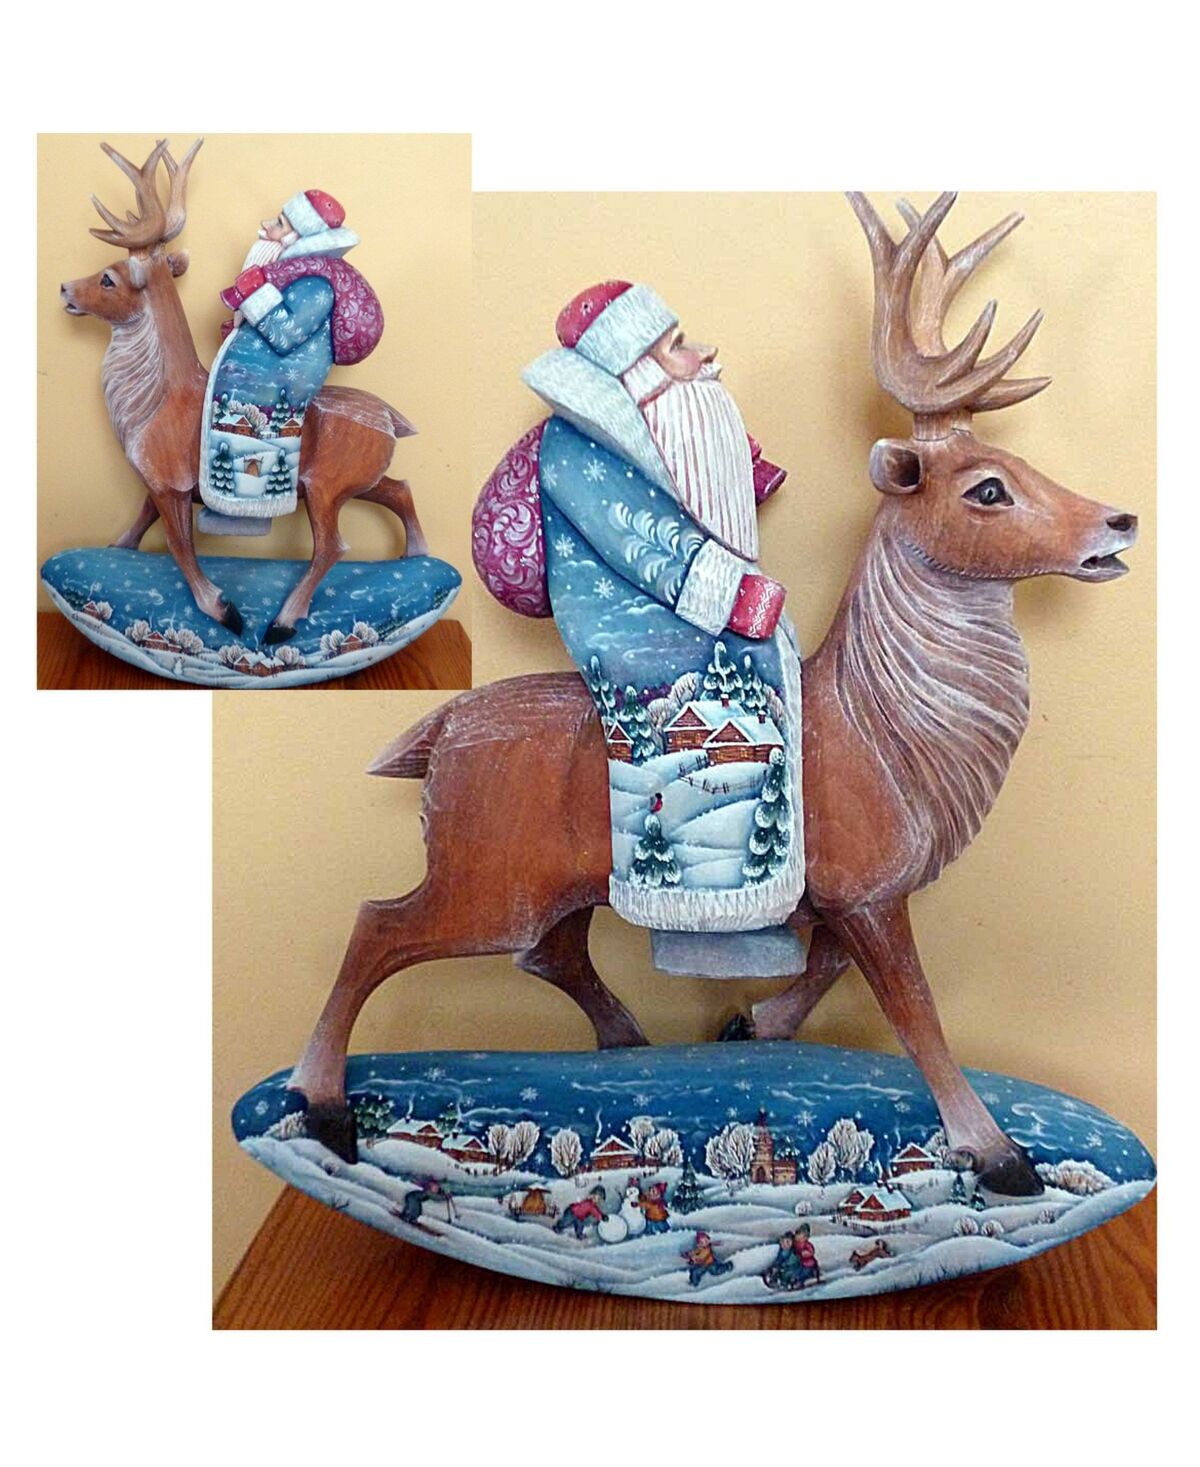 G.DeBrekht Woodcarved and Hand Painted Reindeer Rocking Santa Claus Figurine - Multi